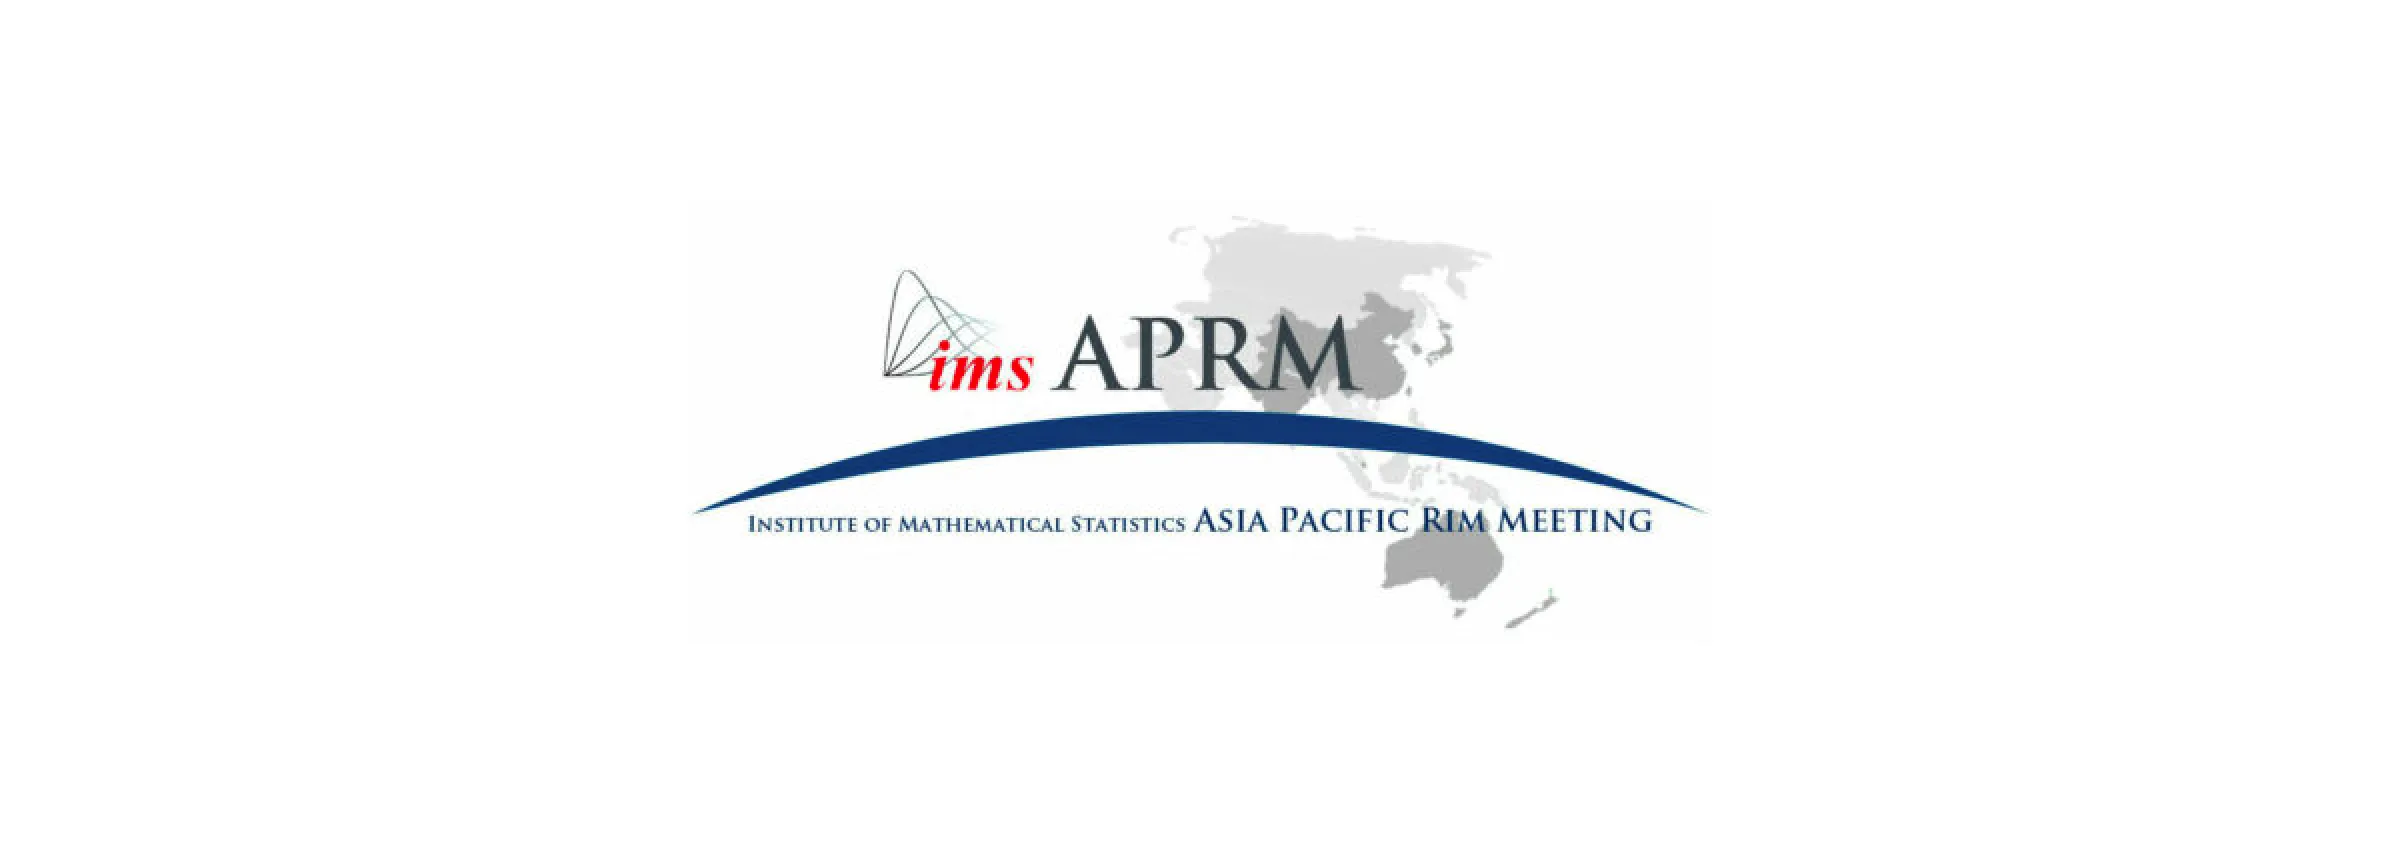 6th IMS Asia Pacific Rim Meeting